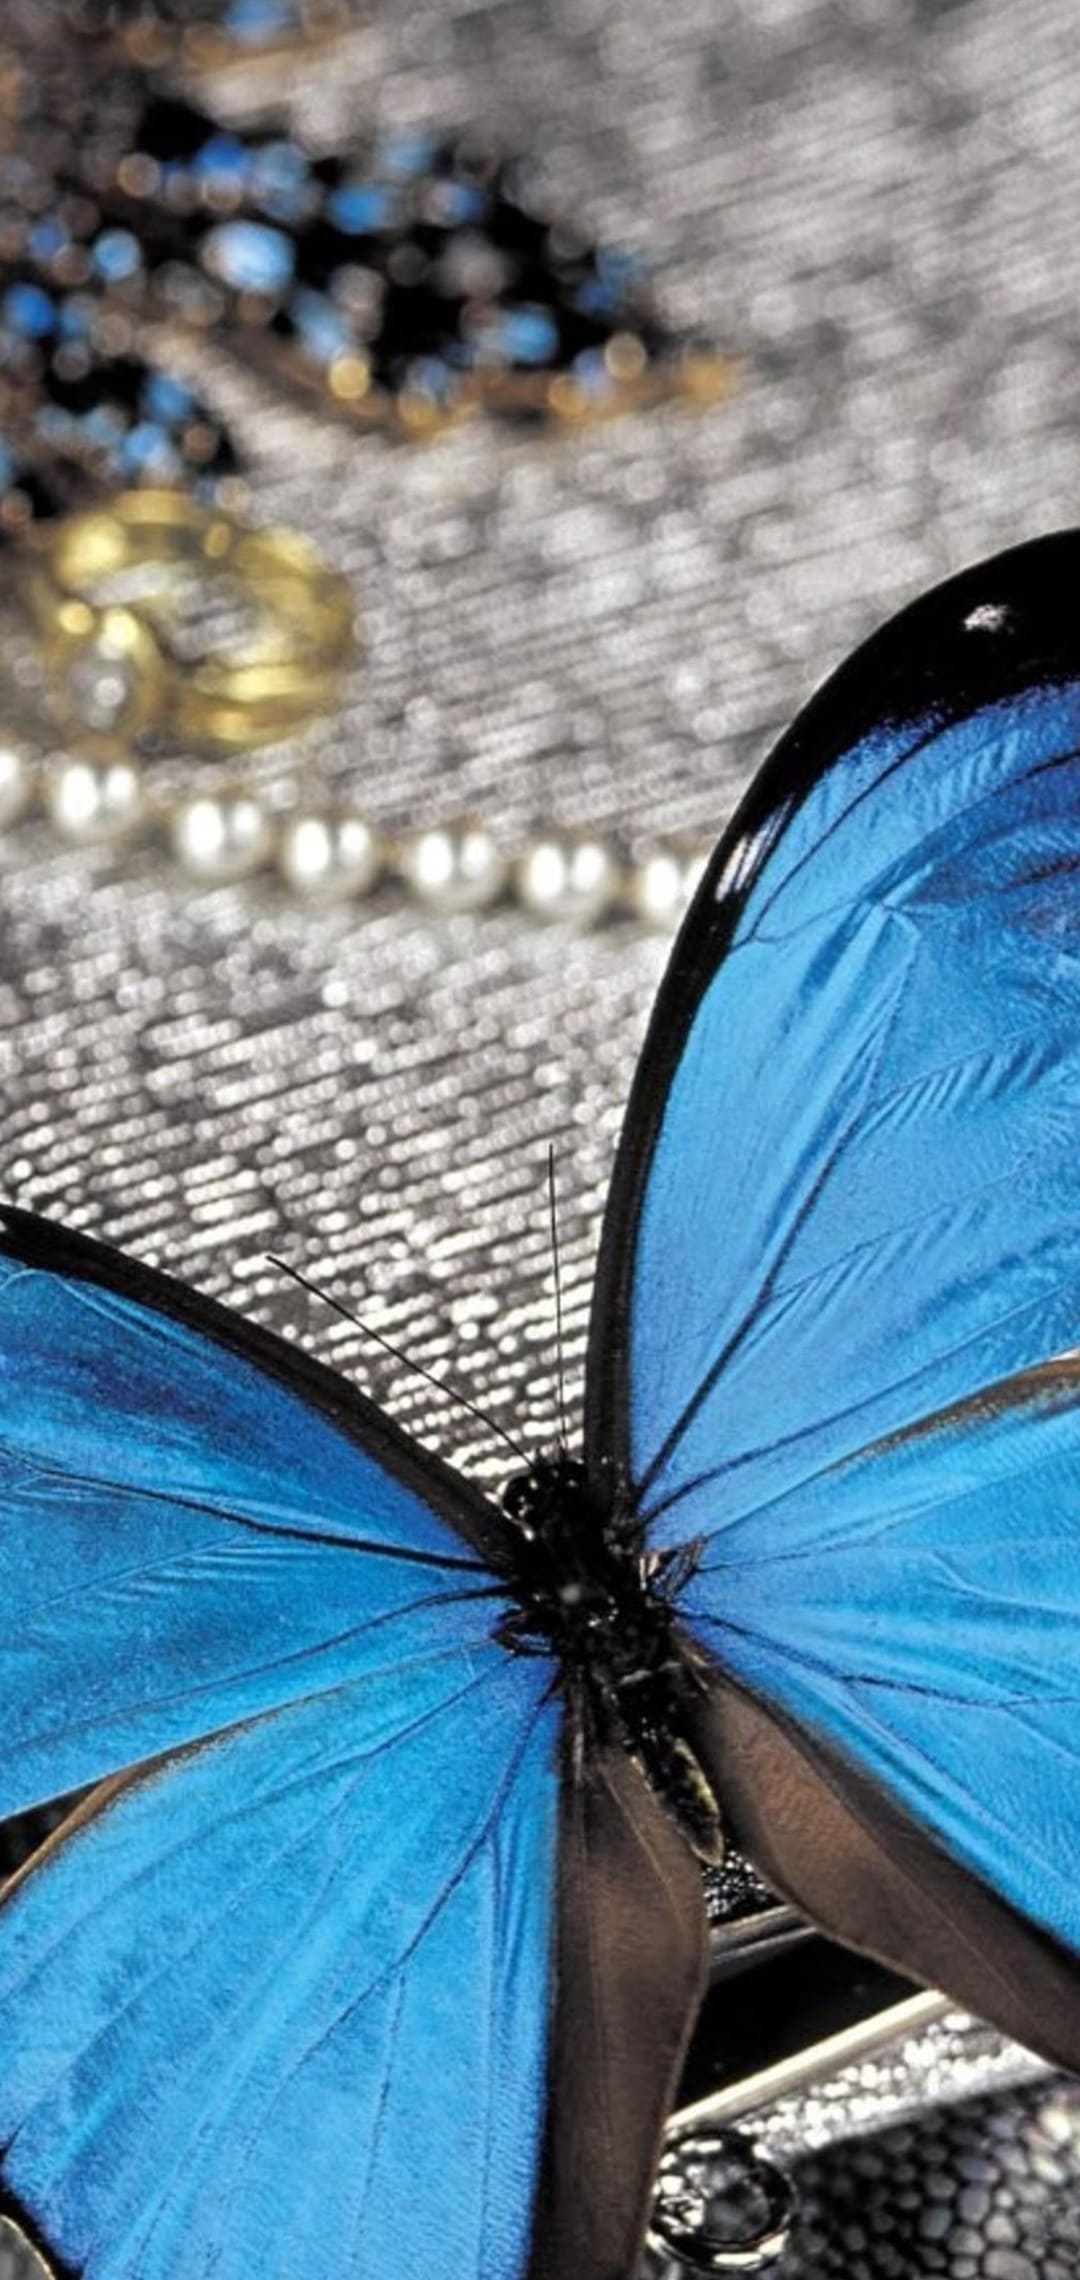 Butterfly Wallpaper Butterfly Background Download